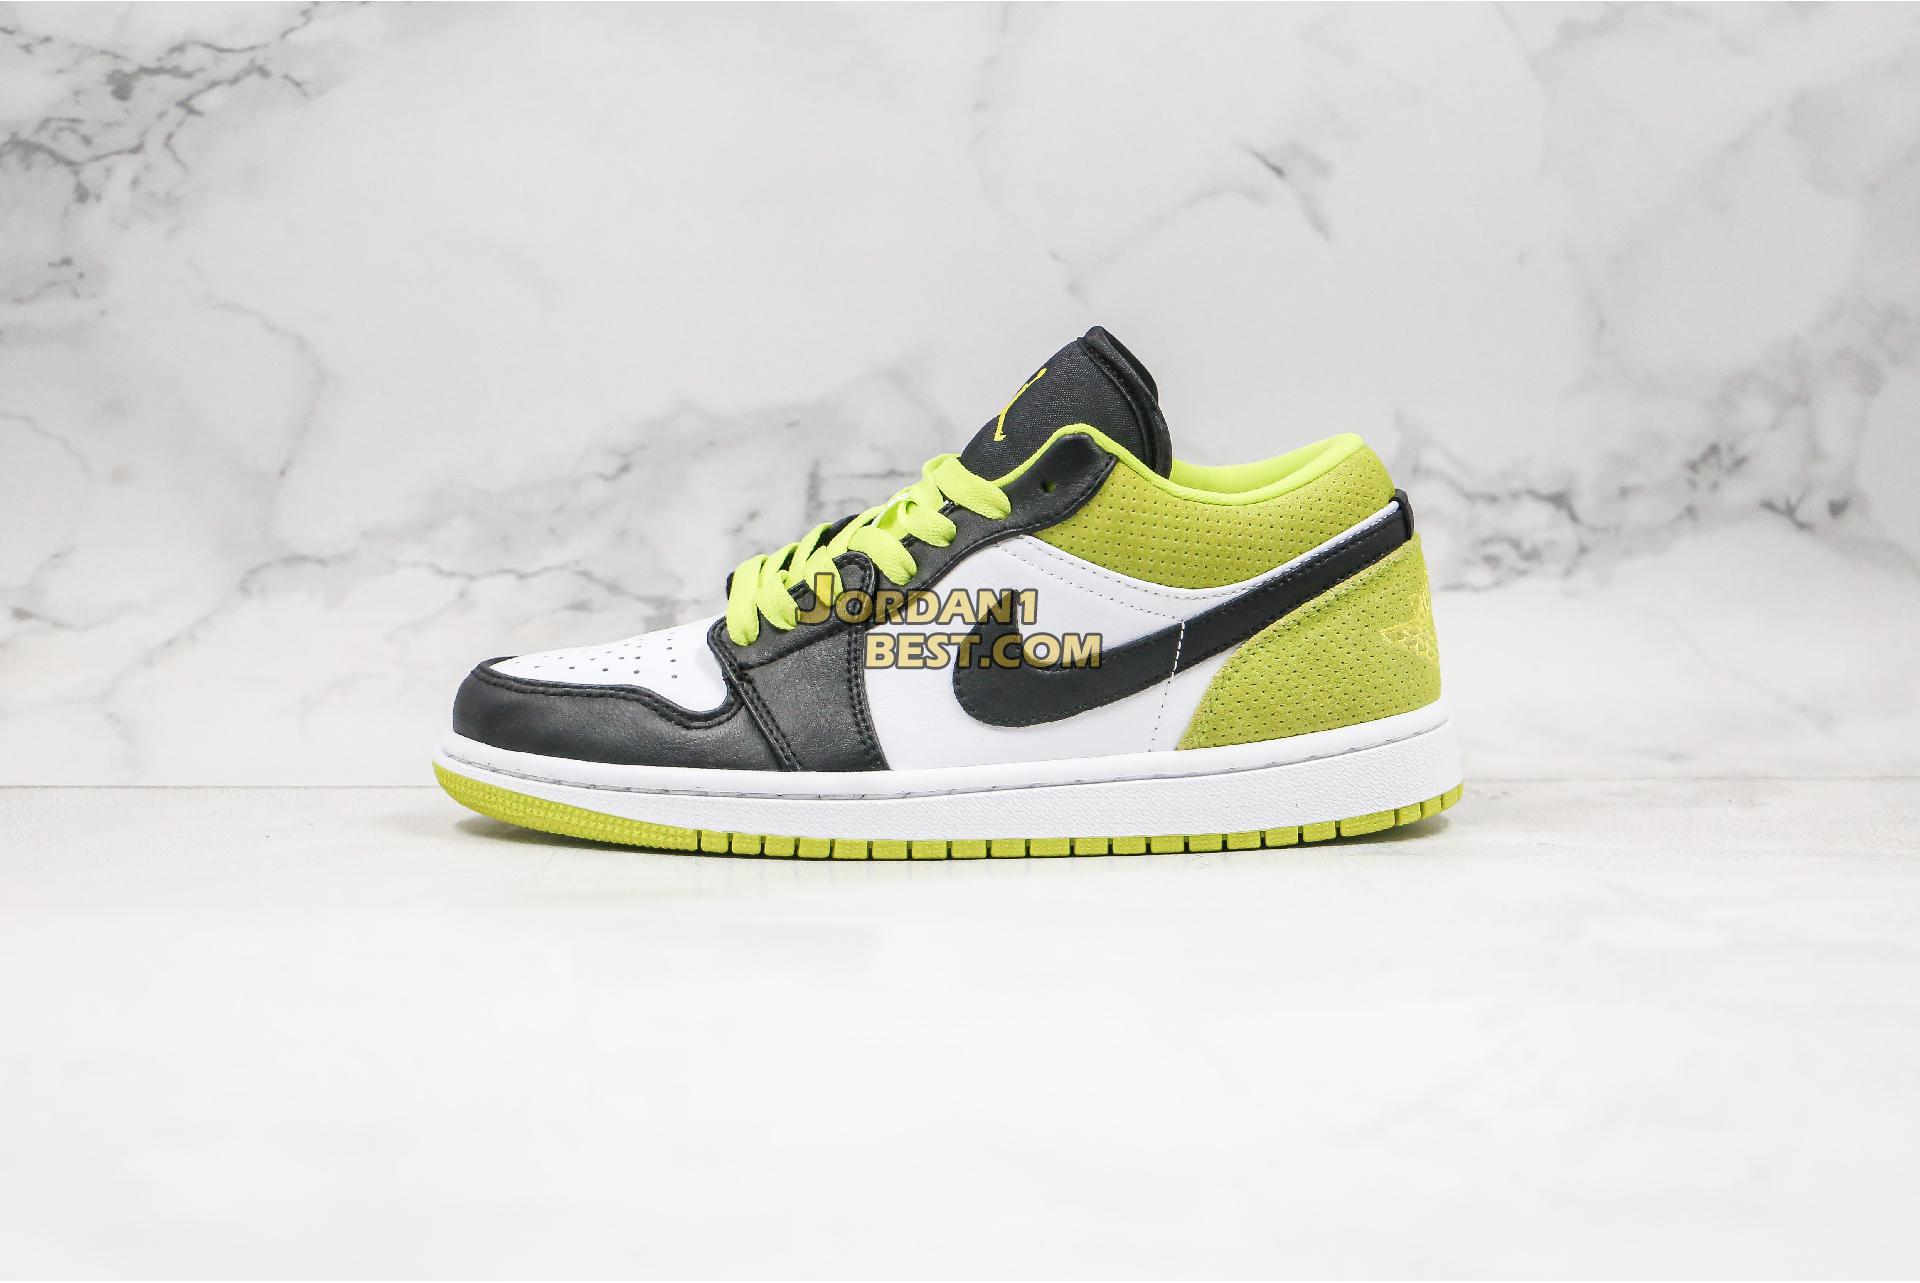 best replicas Air Jordan 1 Low "Black Cyber" CK3022-003 Mens Womens black/cyber-white/grass green Shoes replicas On Wholesale Sale Online